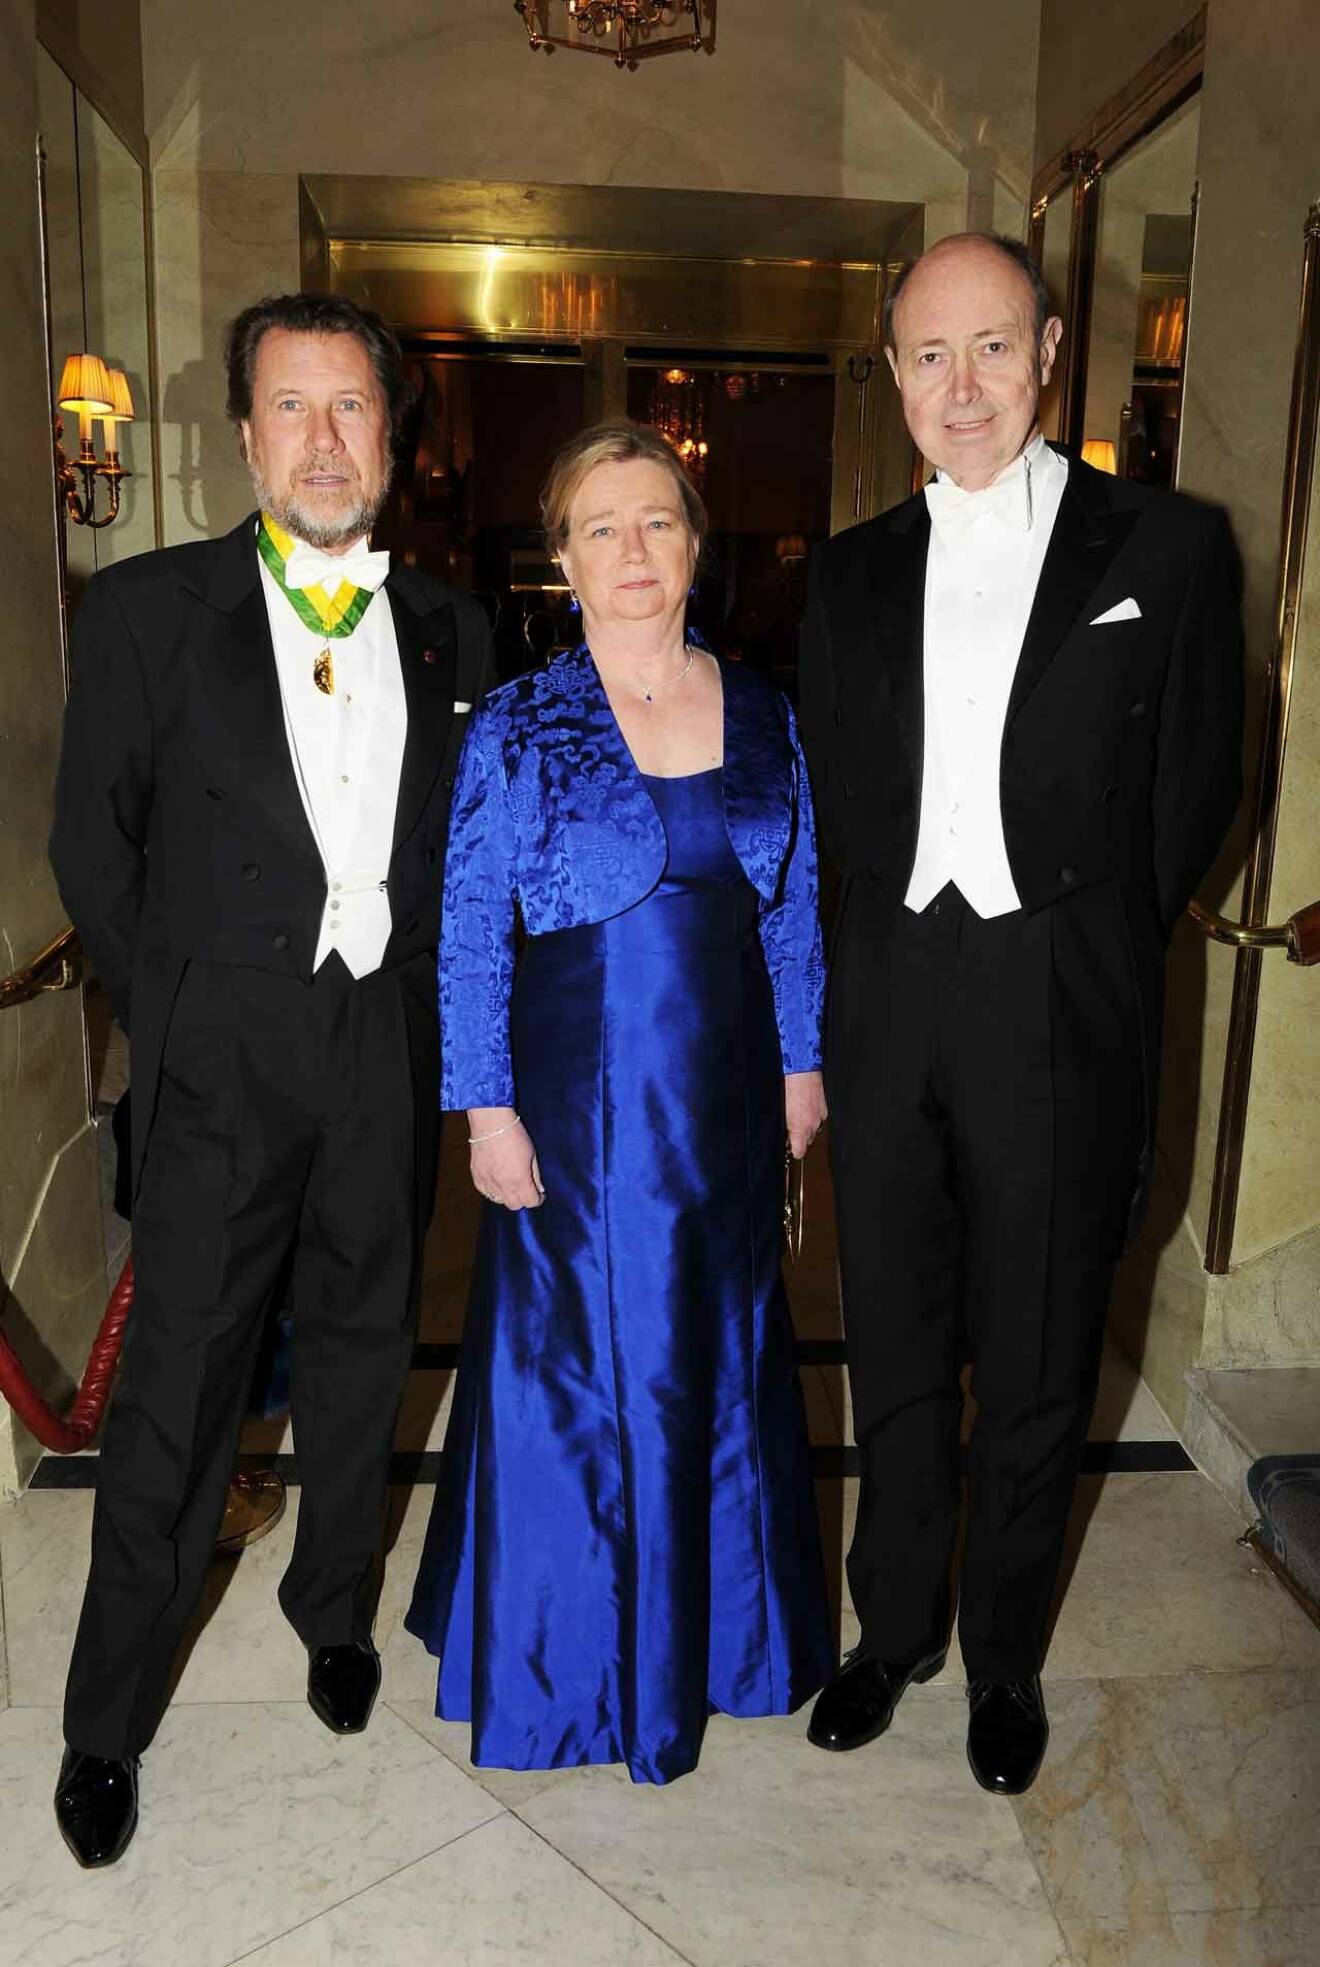 Thomas Hedberg och Clas Romander, 1:e respektive 2:e vice ordförande i KAK, med Catharina Gyllencreutz.